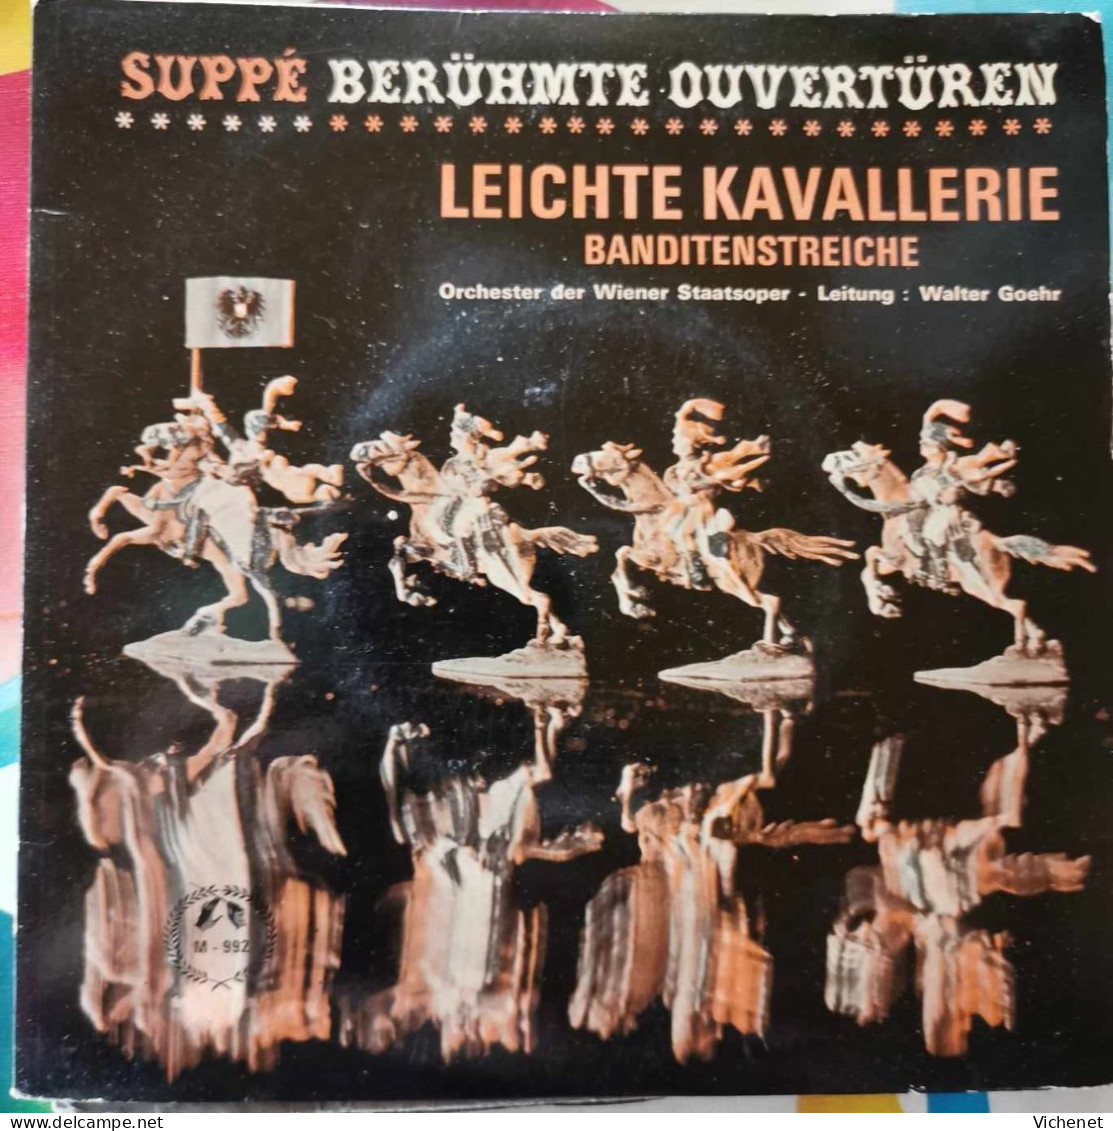 Suppé – Berühmte Ouvertüren - Leichte Kavallerie / Banditenstreiche -  45T - Classica